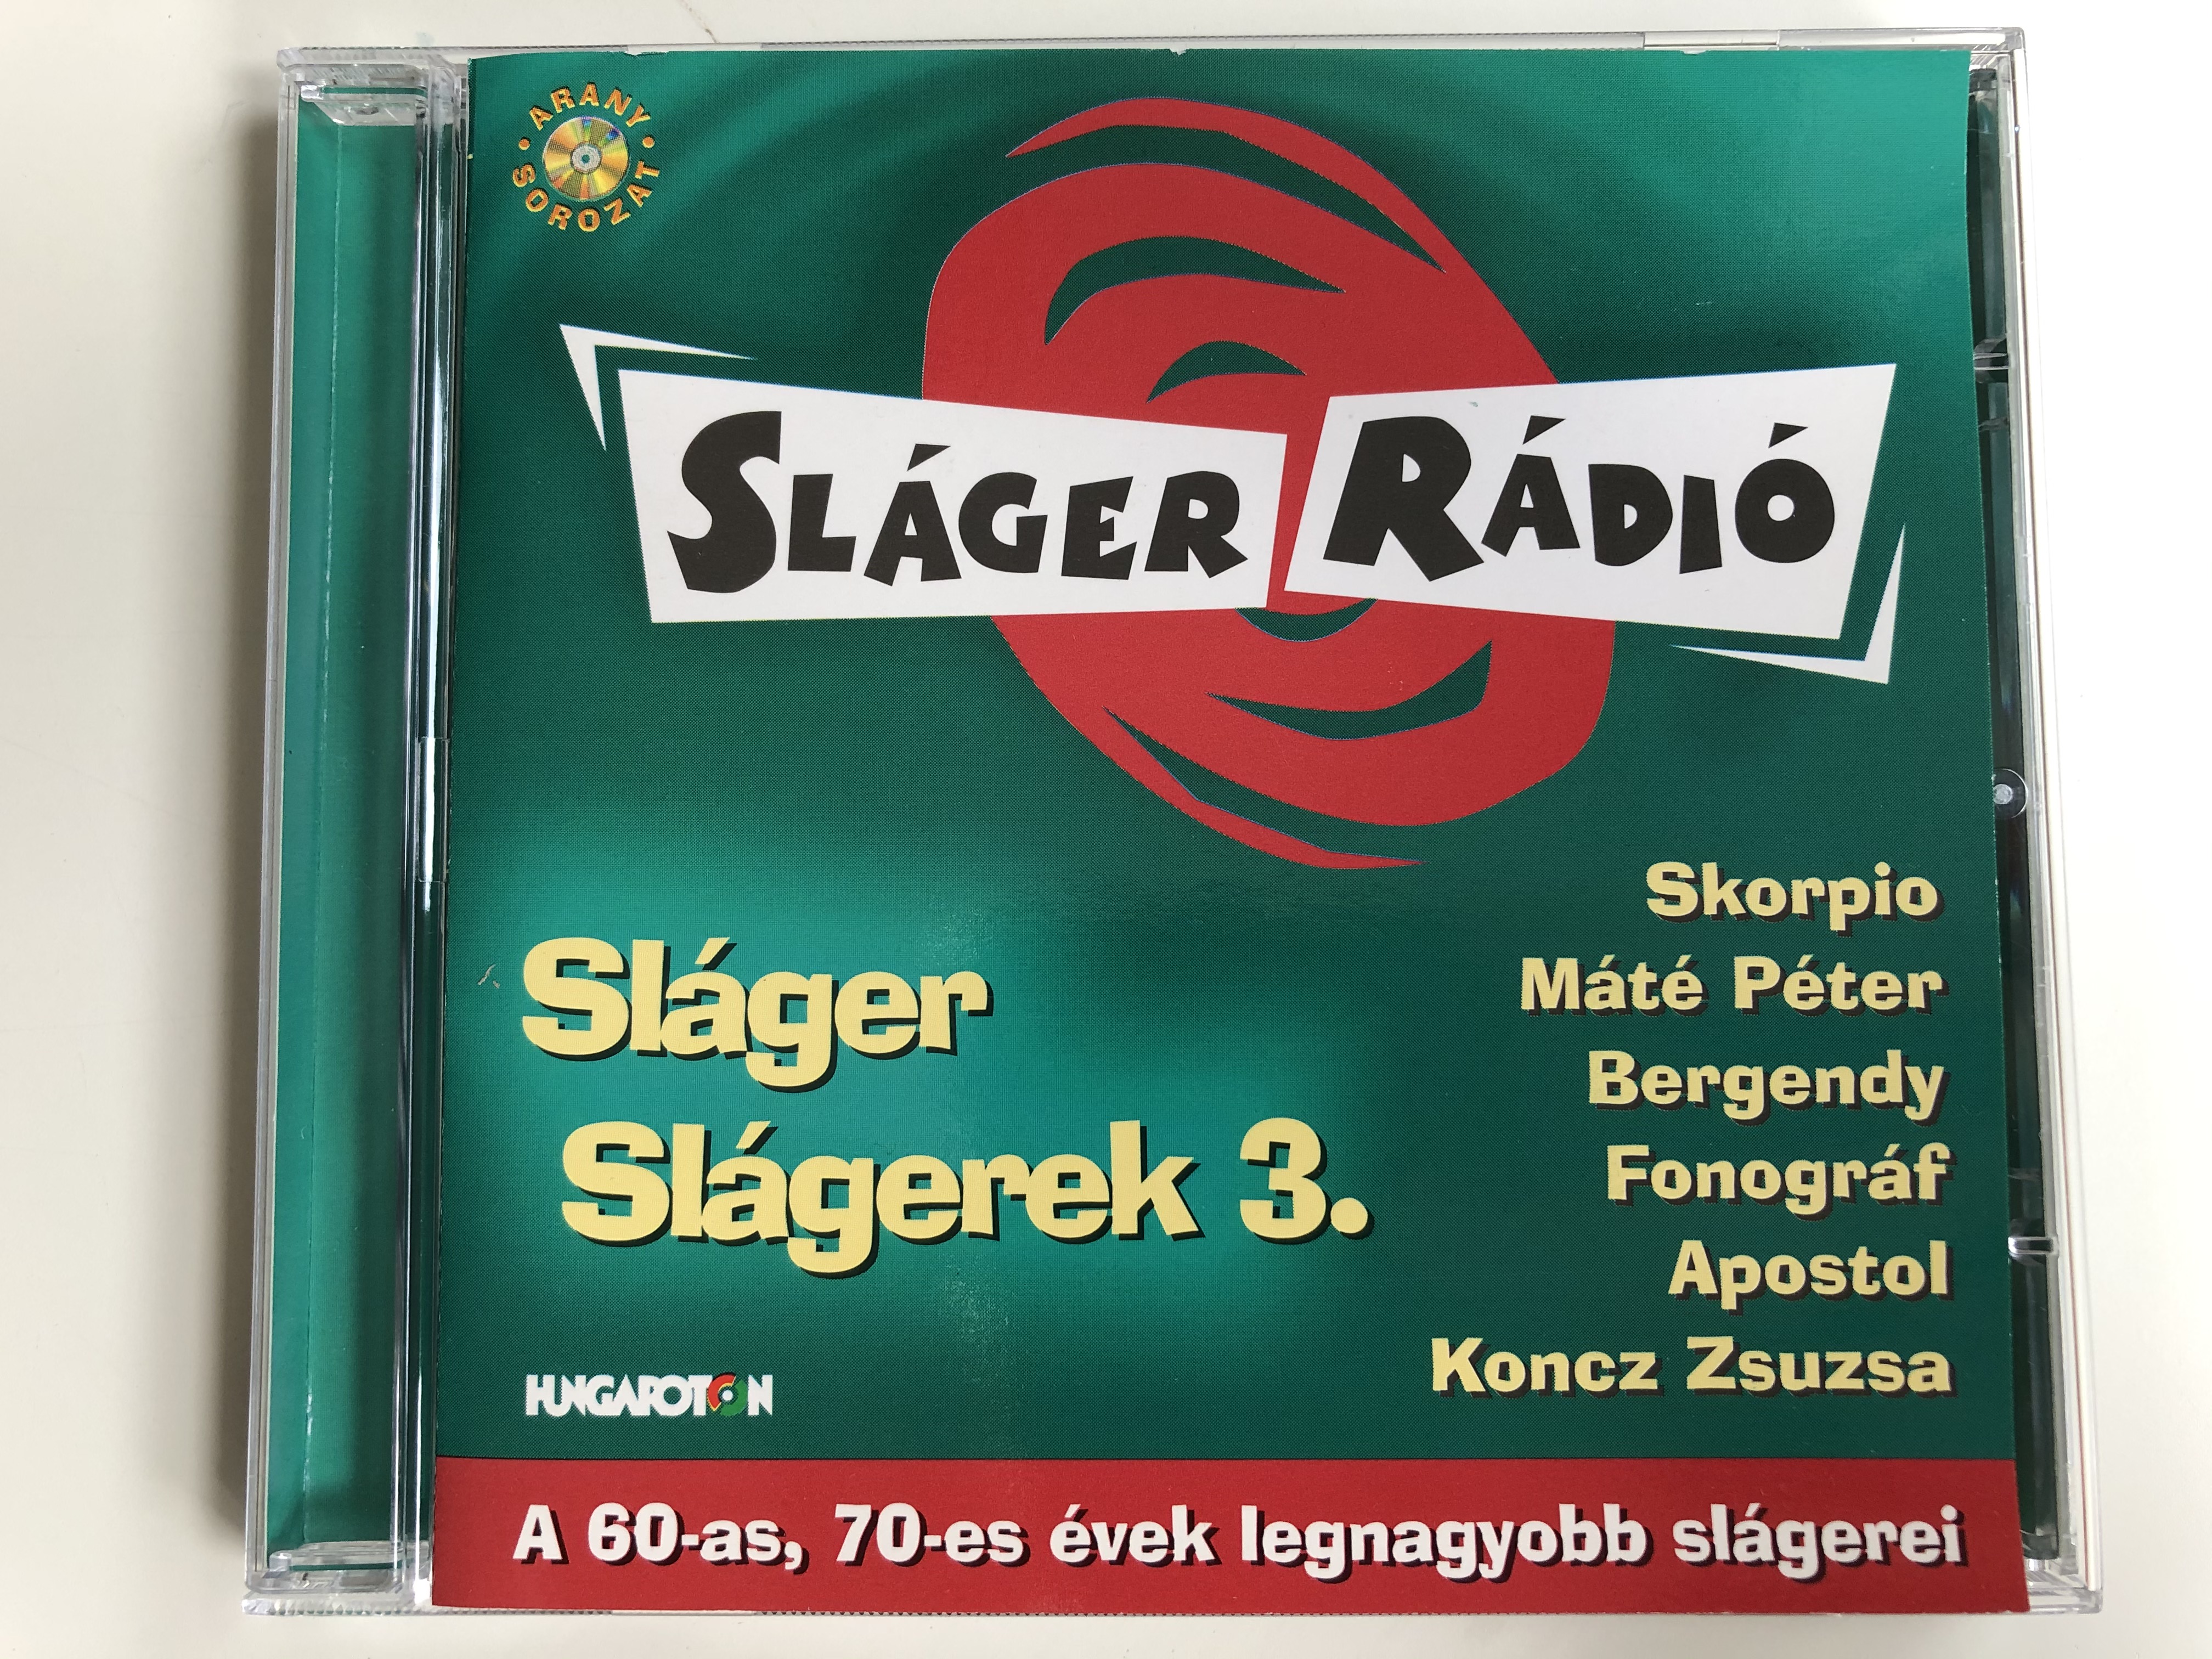 sl-ger-radio-sl-ger-sl-gerek-3.-skorpi-m-t-p-ter-bergendy-fonogr-f-apostol-koncz-zsuzsa-a-60-as-70-es-evek-legnagyobb-slagerei-hungaroton-audio-cd-2000-hcd-71030-1-.jpg